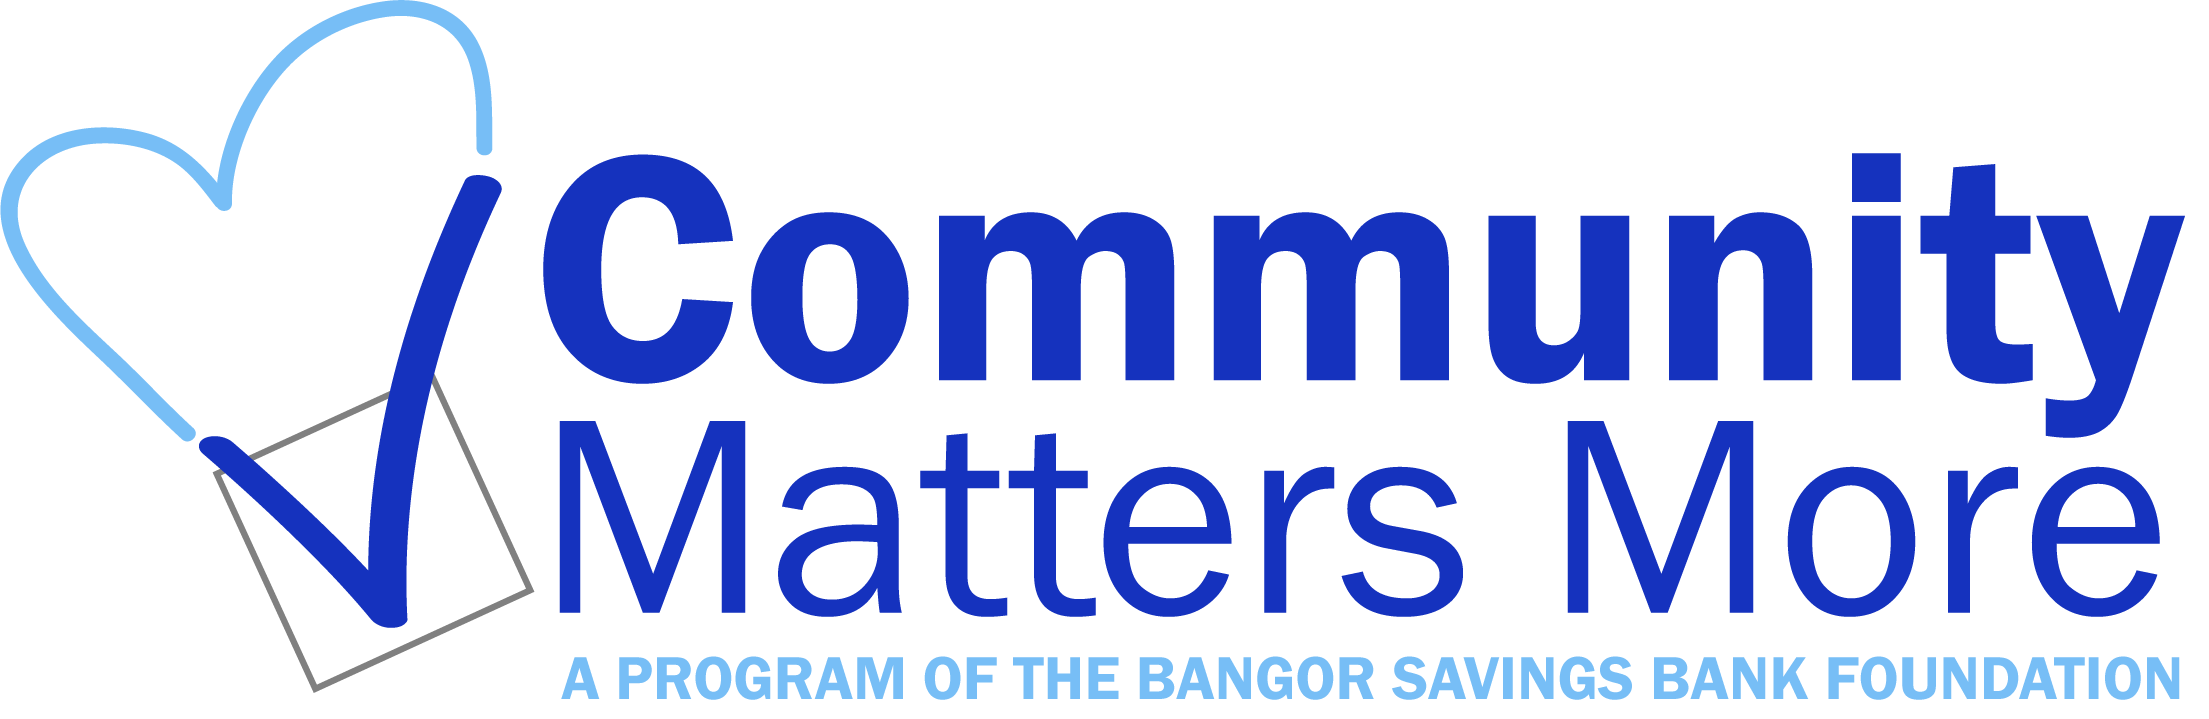 Community Matters More a Program of The Bangor Savings Bank Foundation